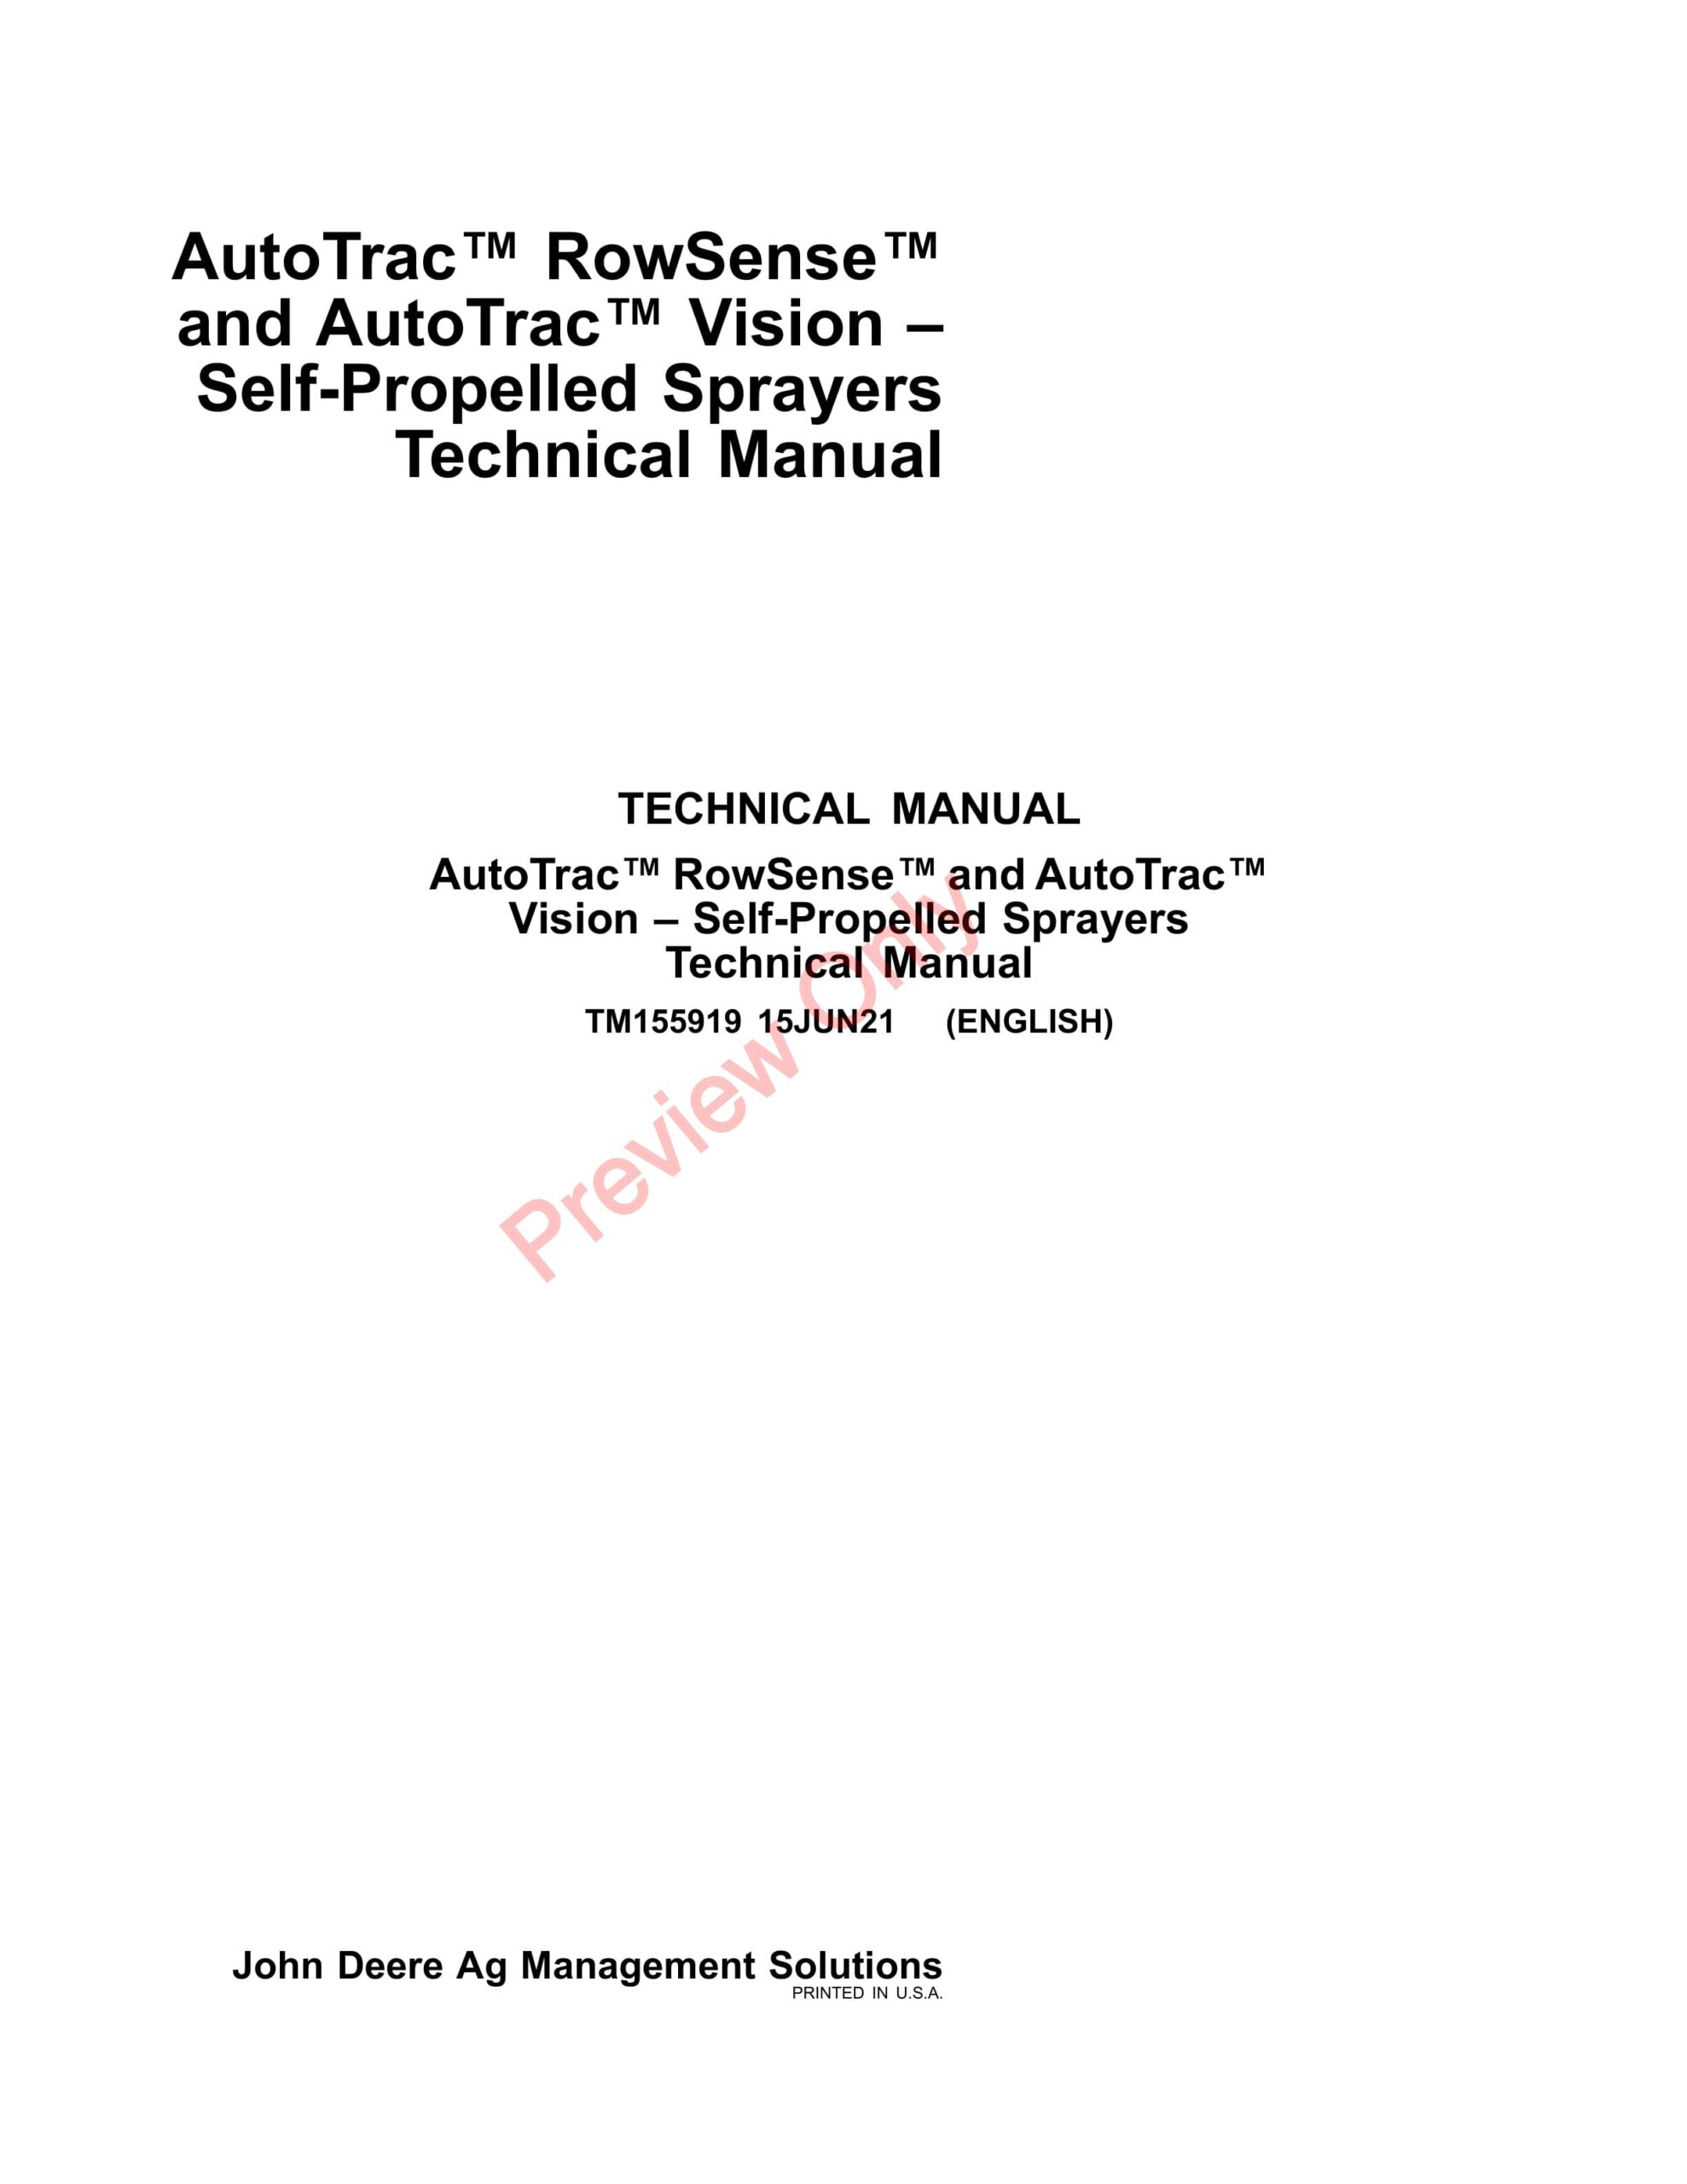 John Deere AutoTrac RowSense and AutoTrac Vision – Self Technical Manual TM155919 15JUN21-1